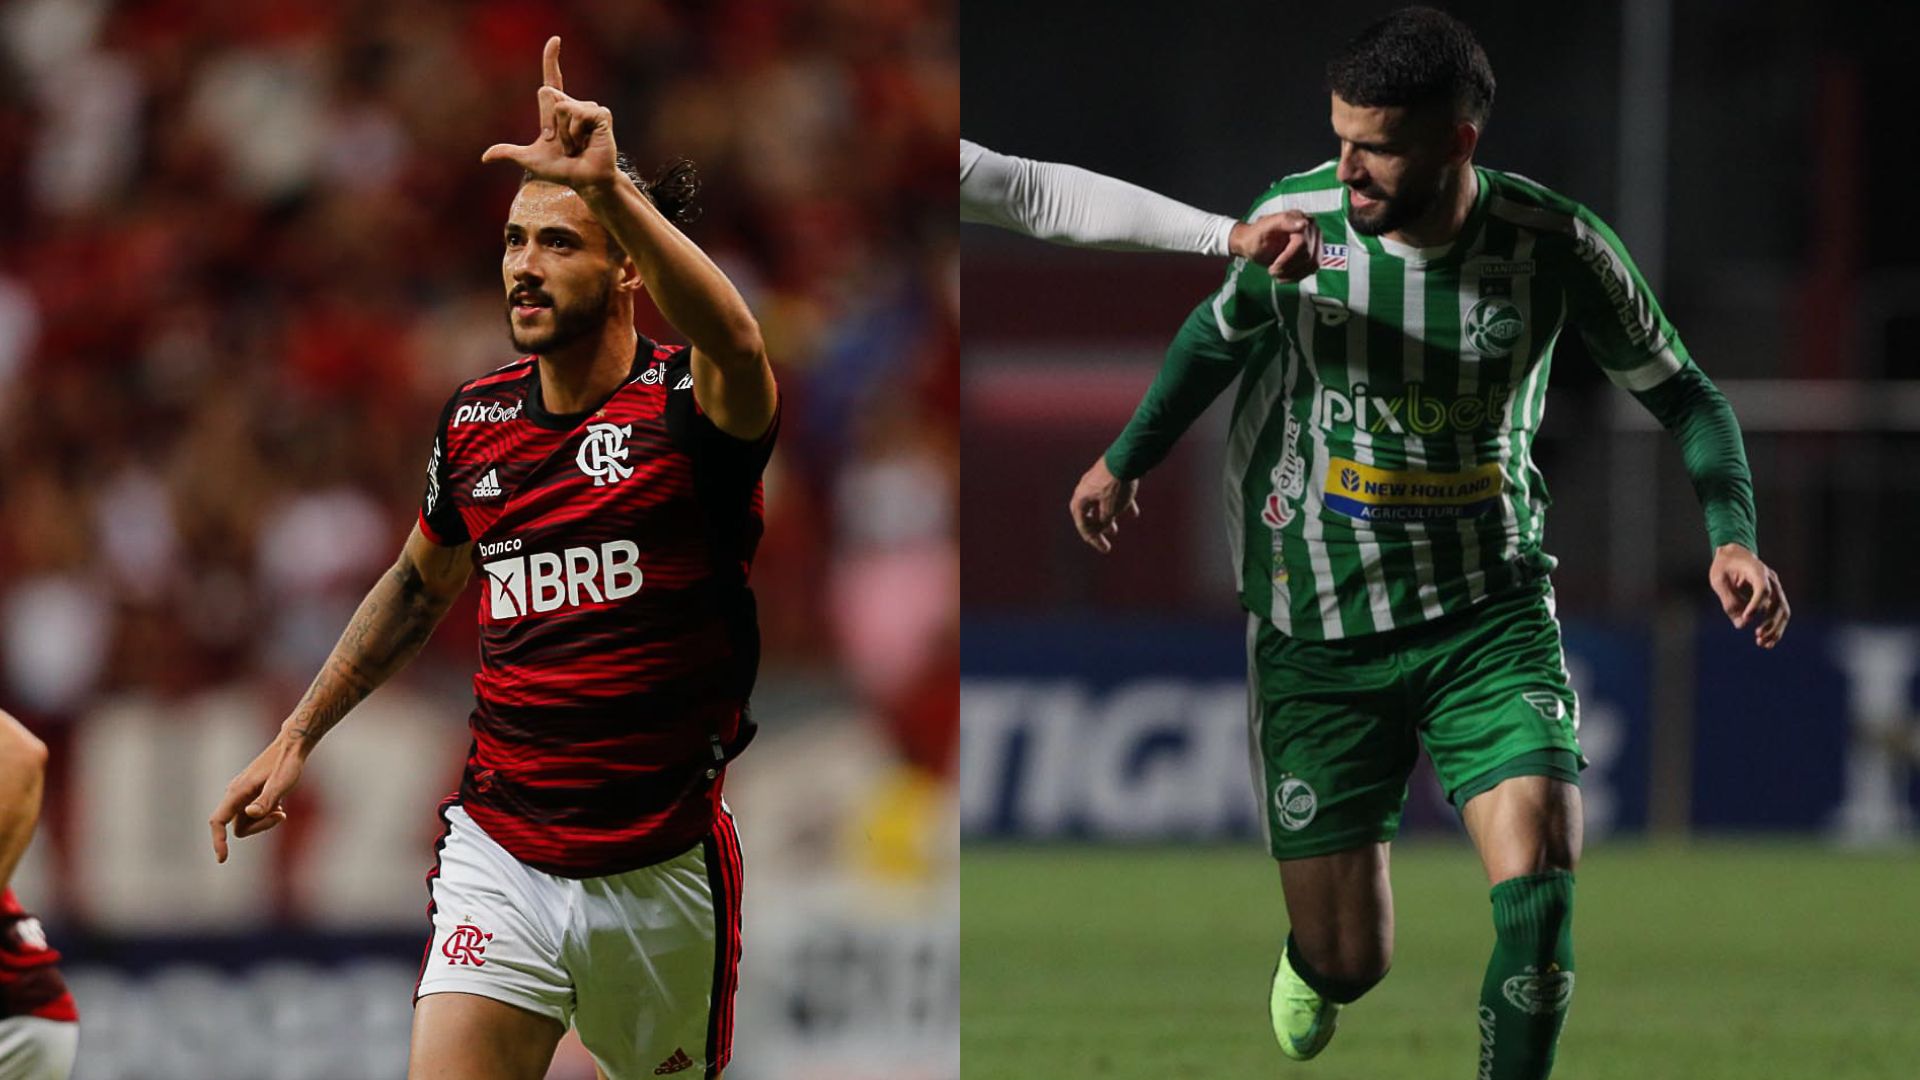 Tombense vs Criciúma: A Clash of Two Brazilian Football Giants